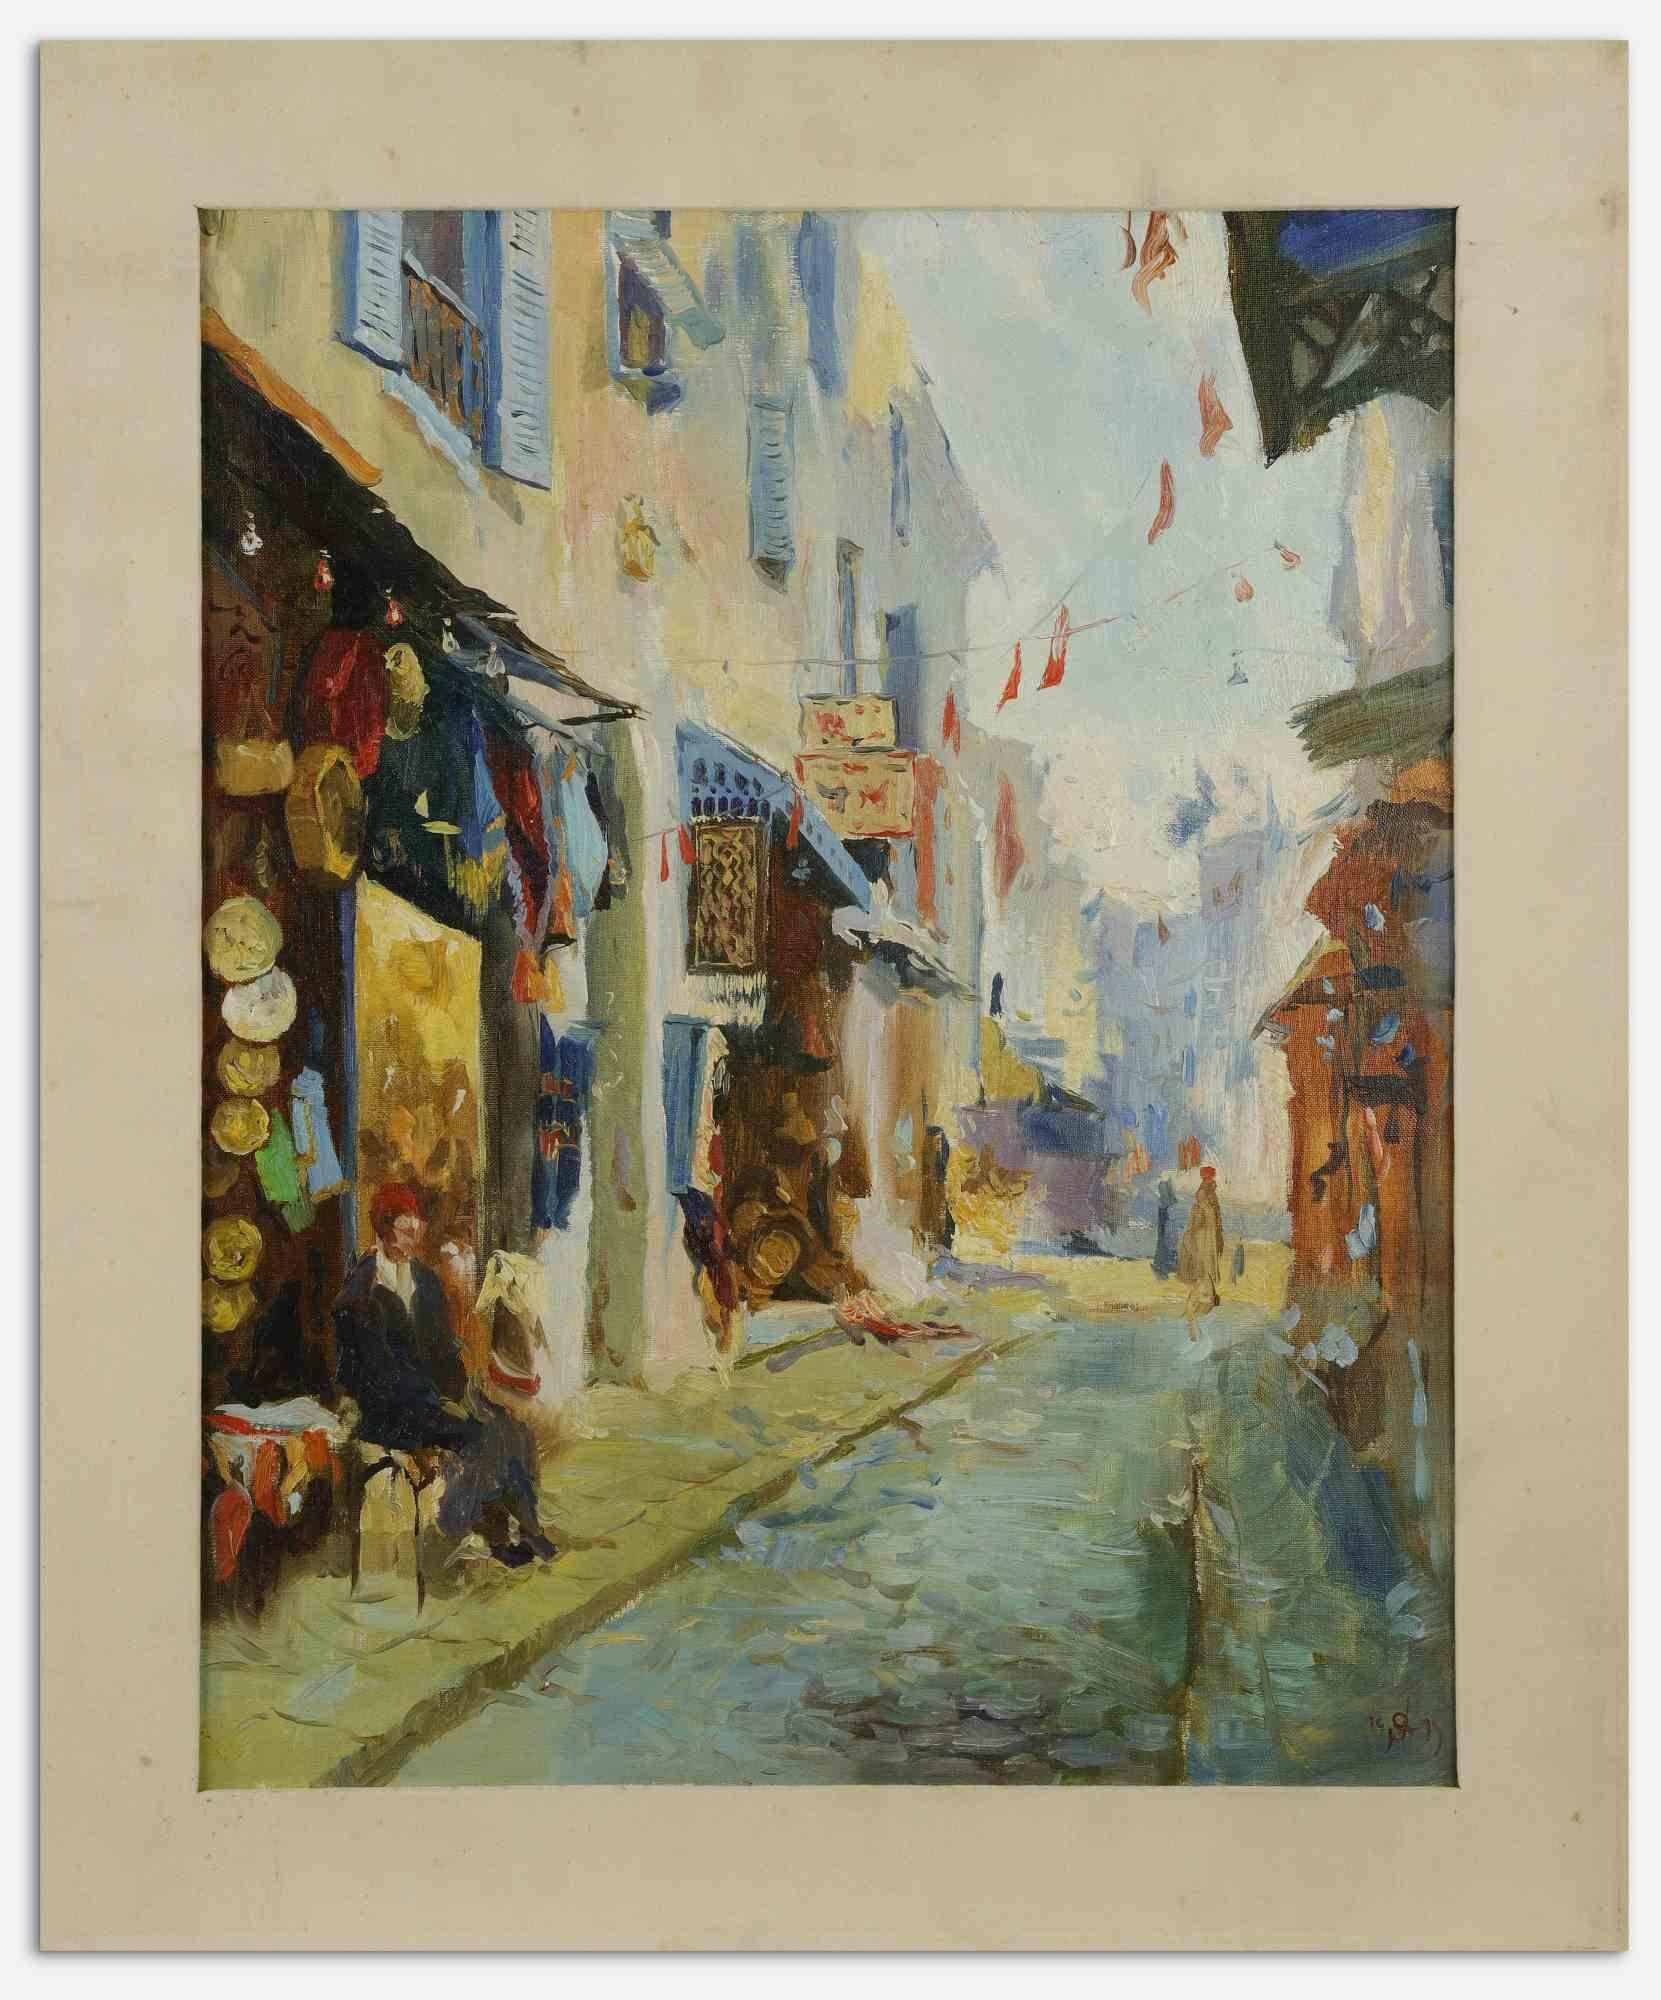 Alexander Sergheev Landscape Painting - Streets of Tunis - Oil on Canvas by A. Sergheev - 1994